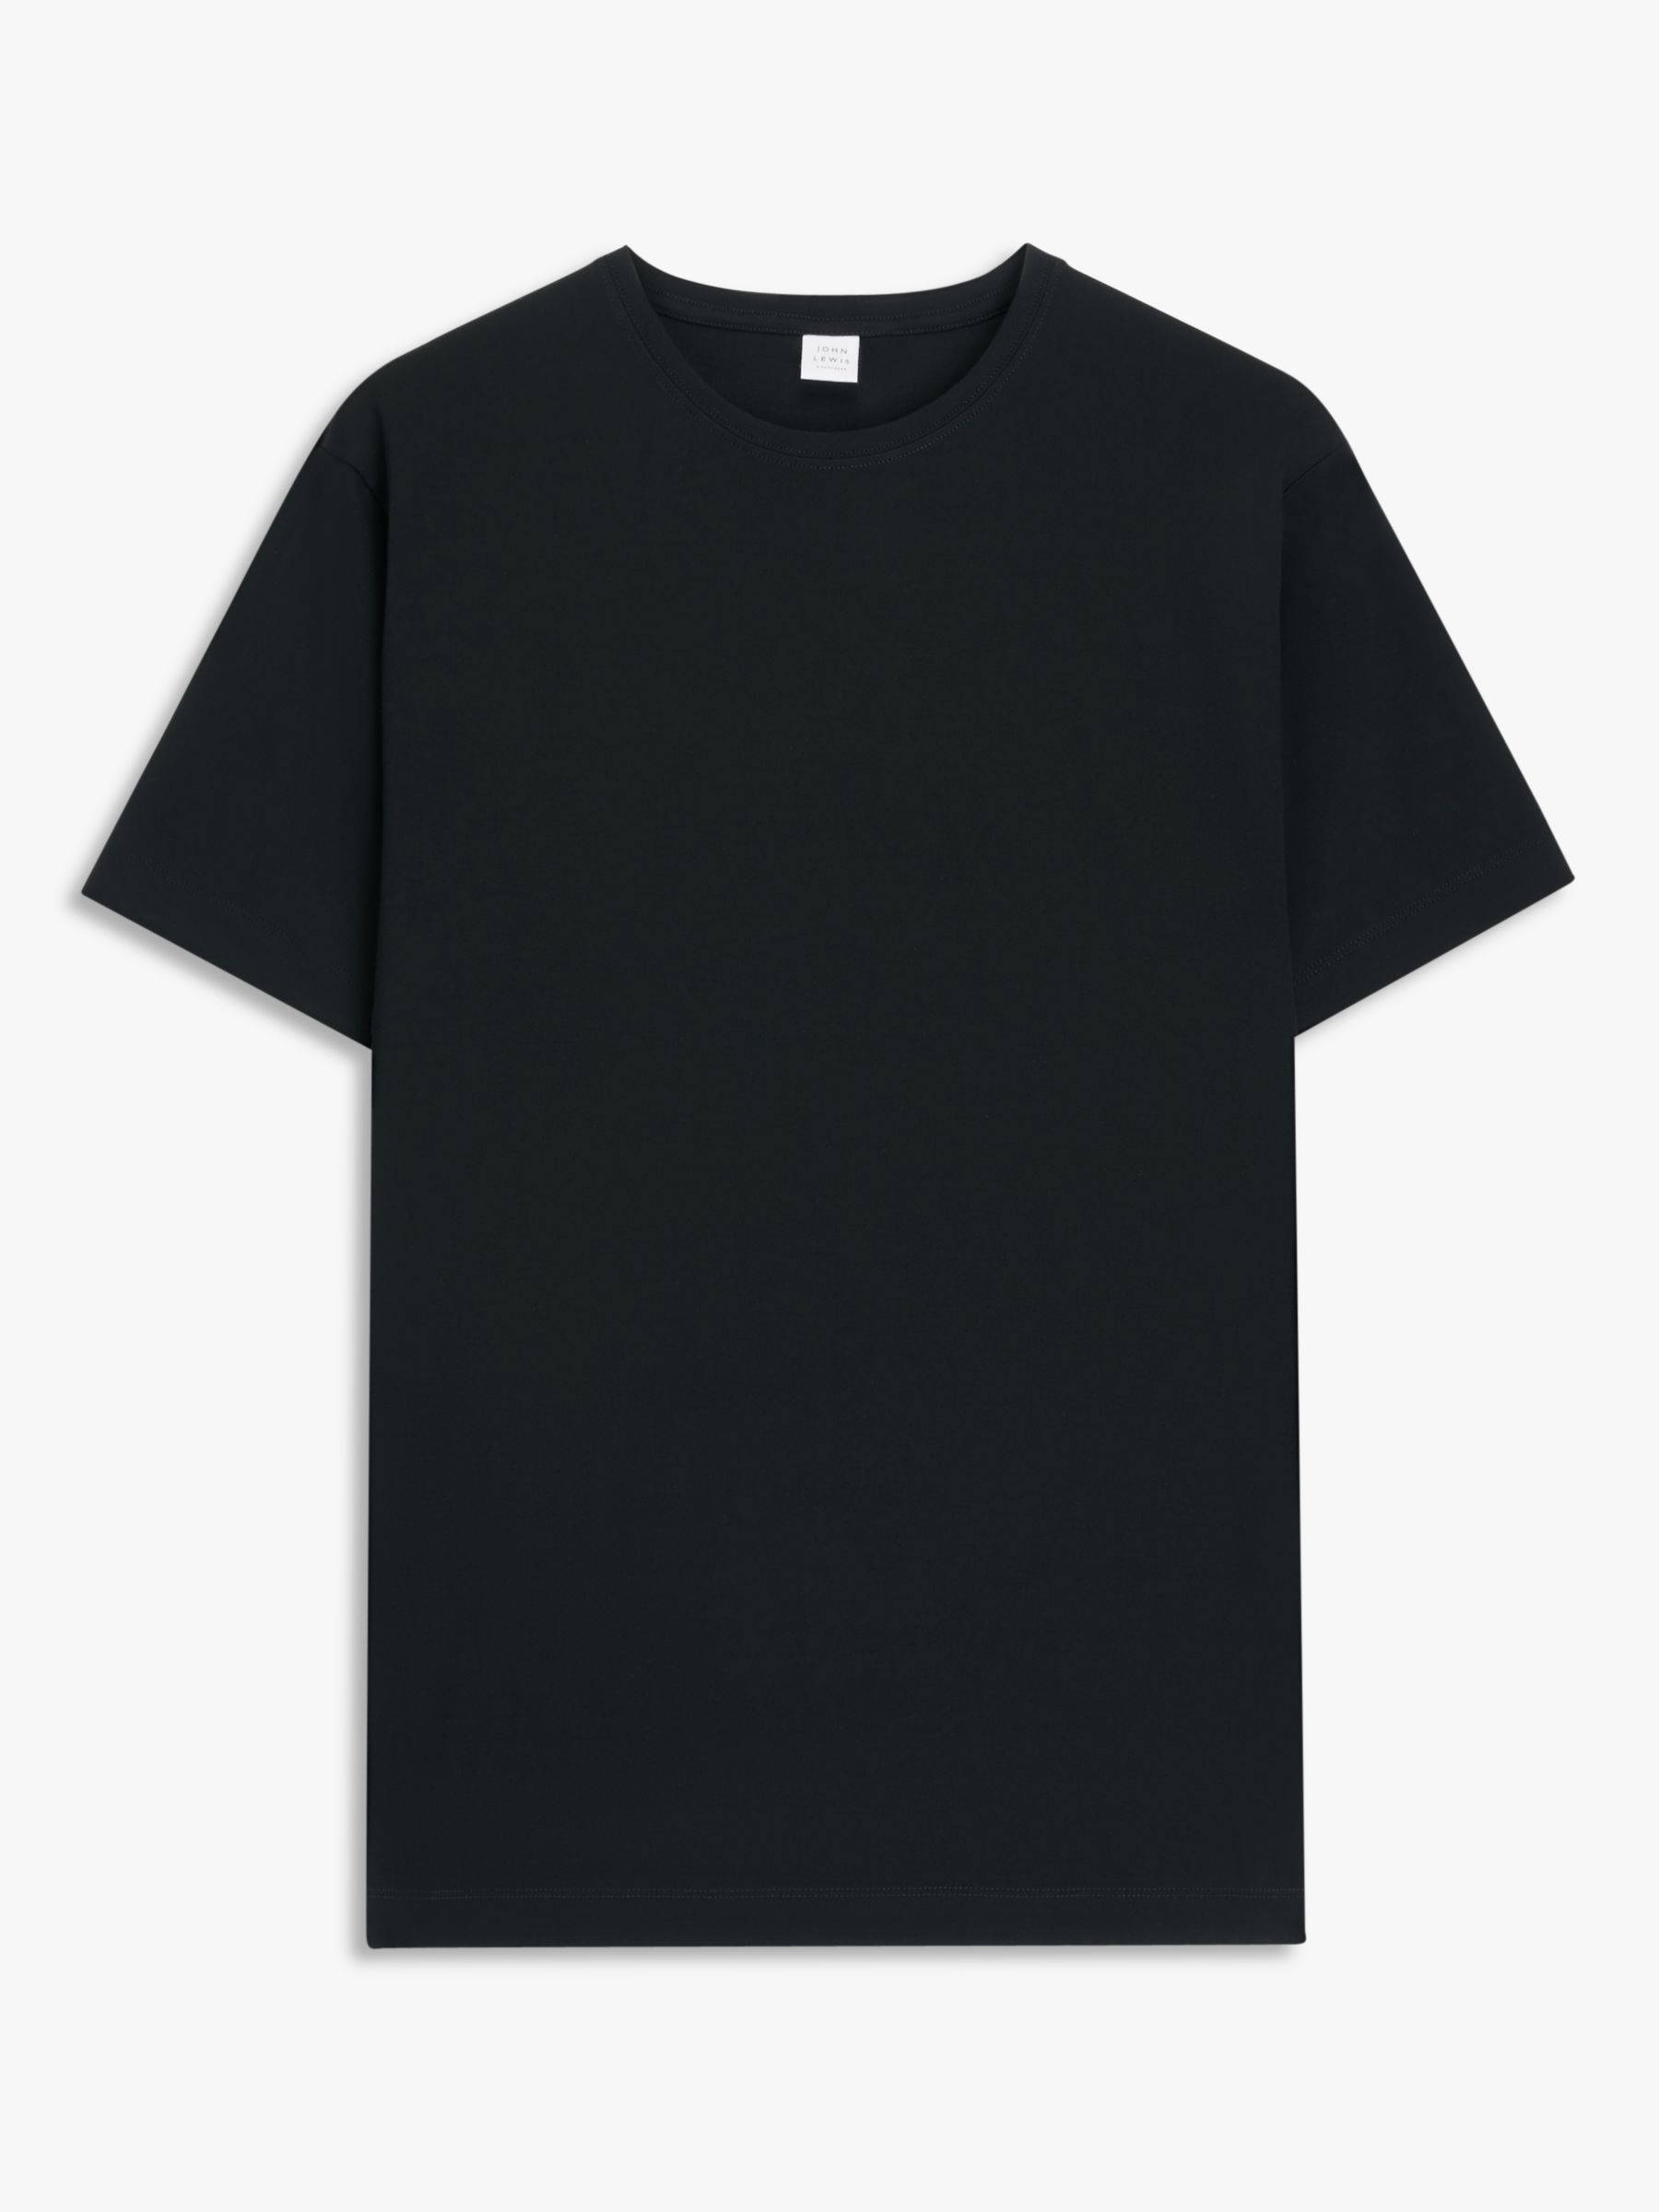 John Lewis Supima Cotton Jersey Crew Neck T-Shirt, Black, S